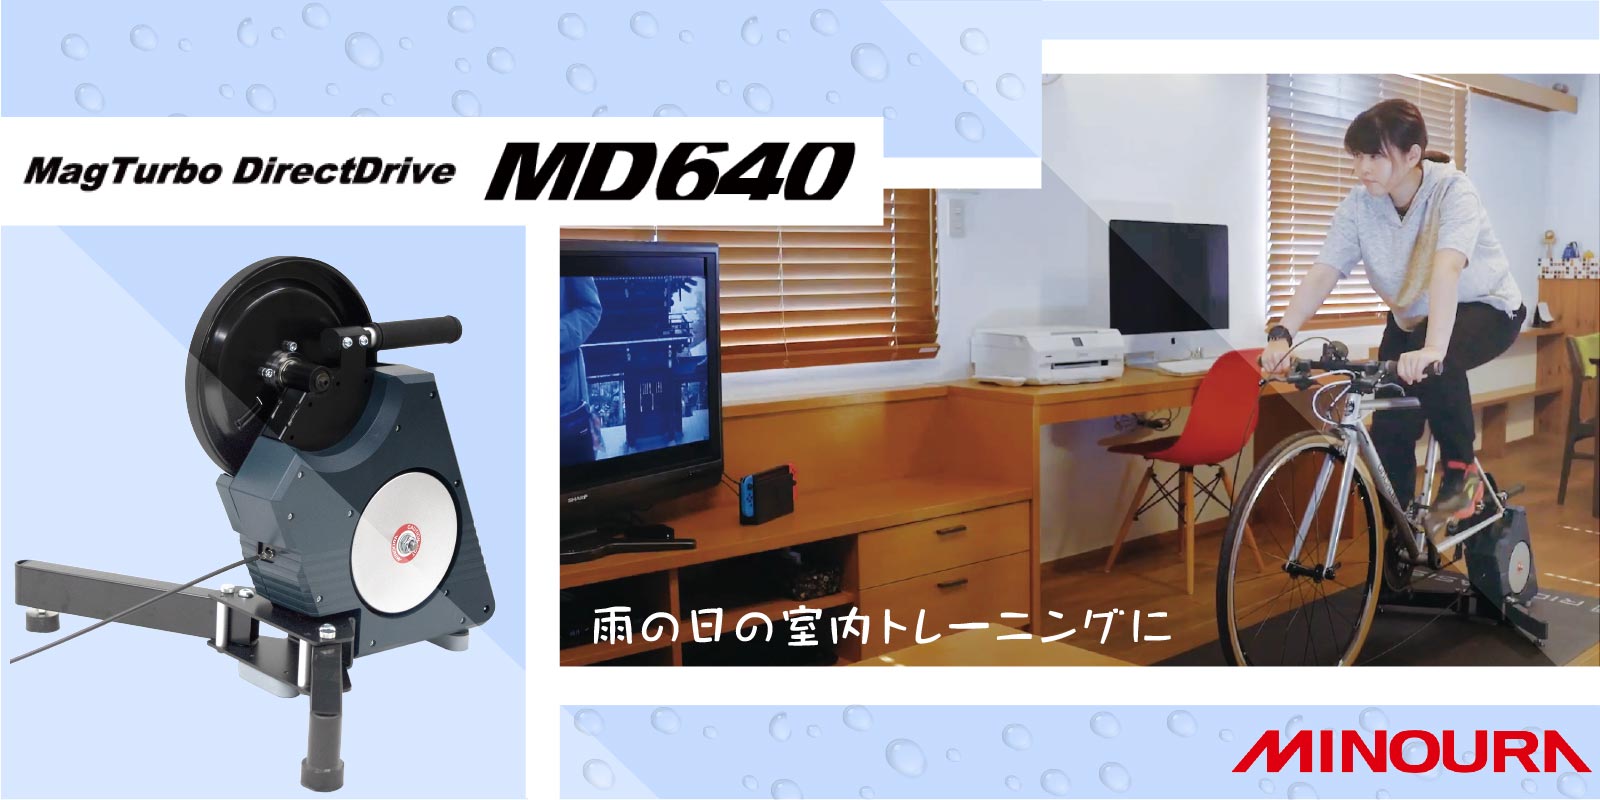 MINOURA（トレーナー）MD640